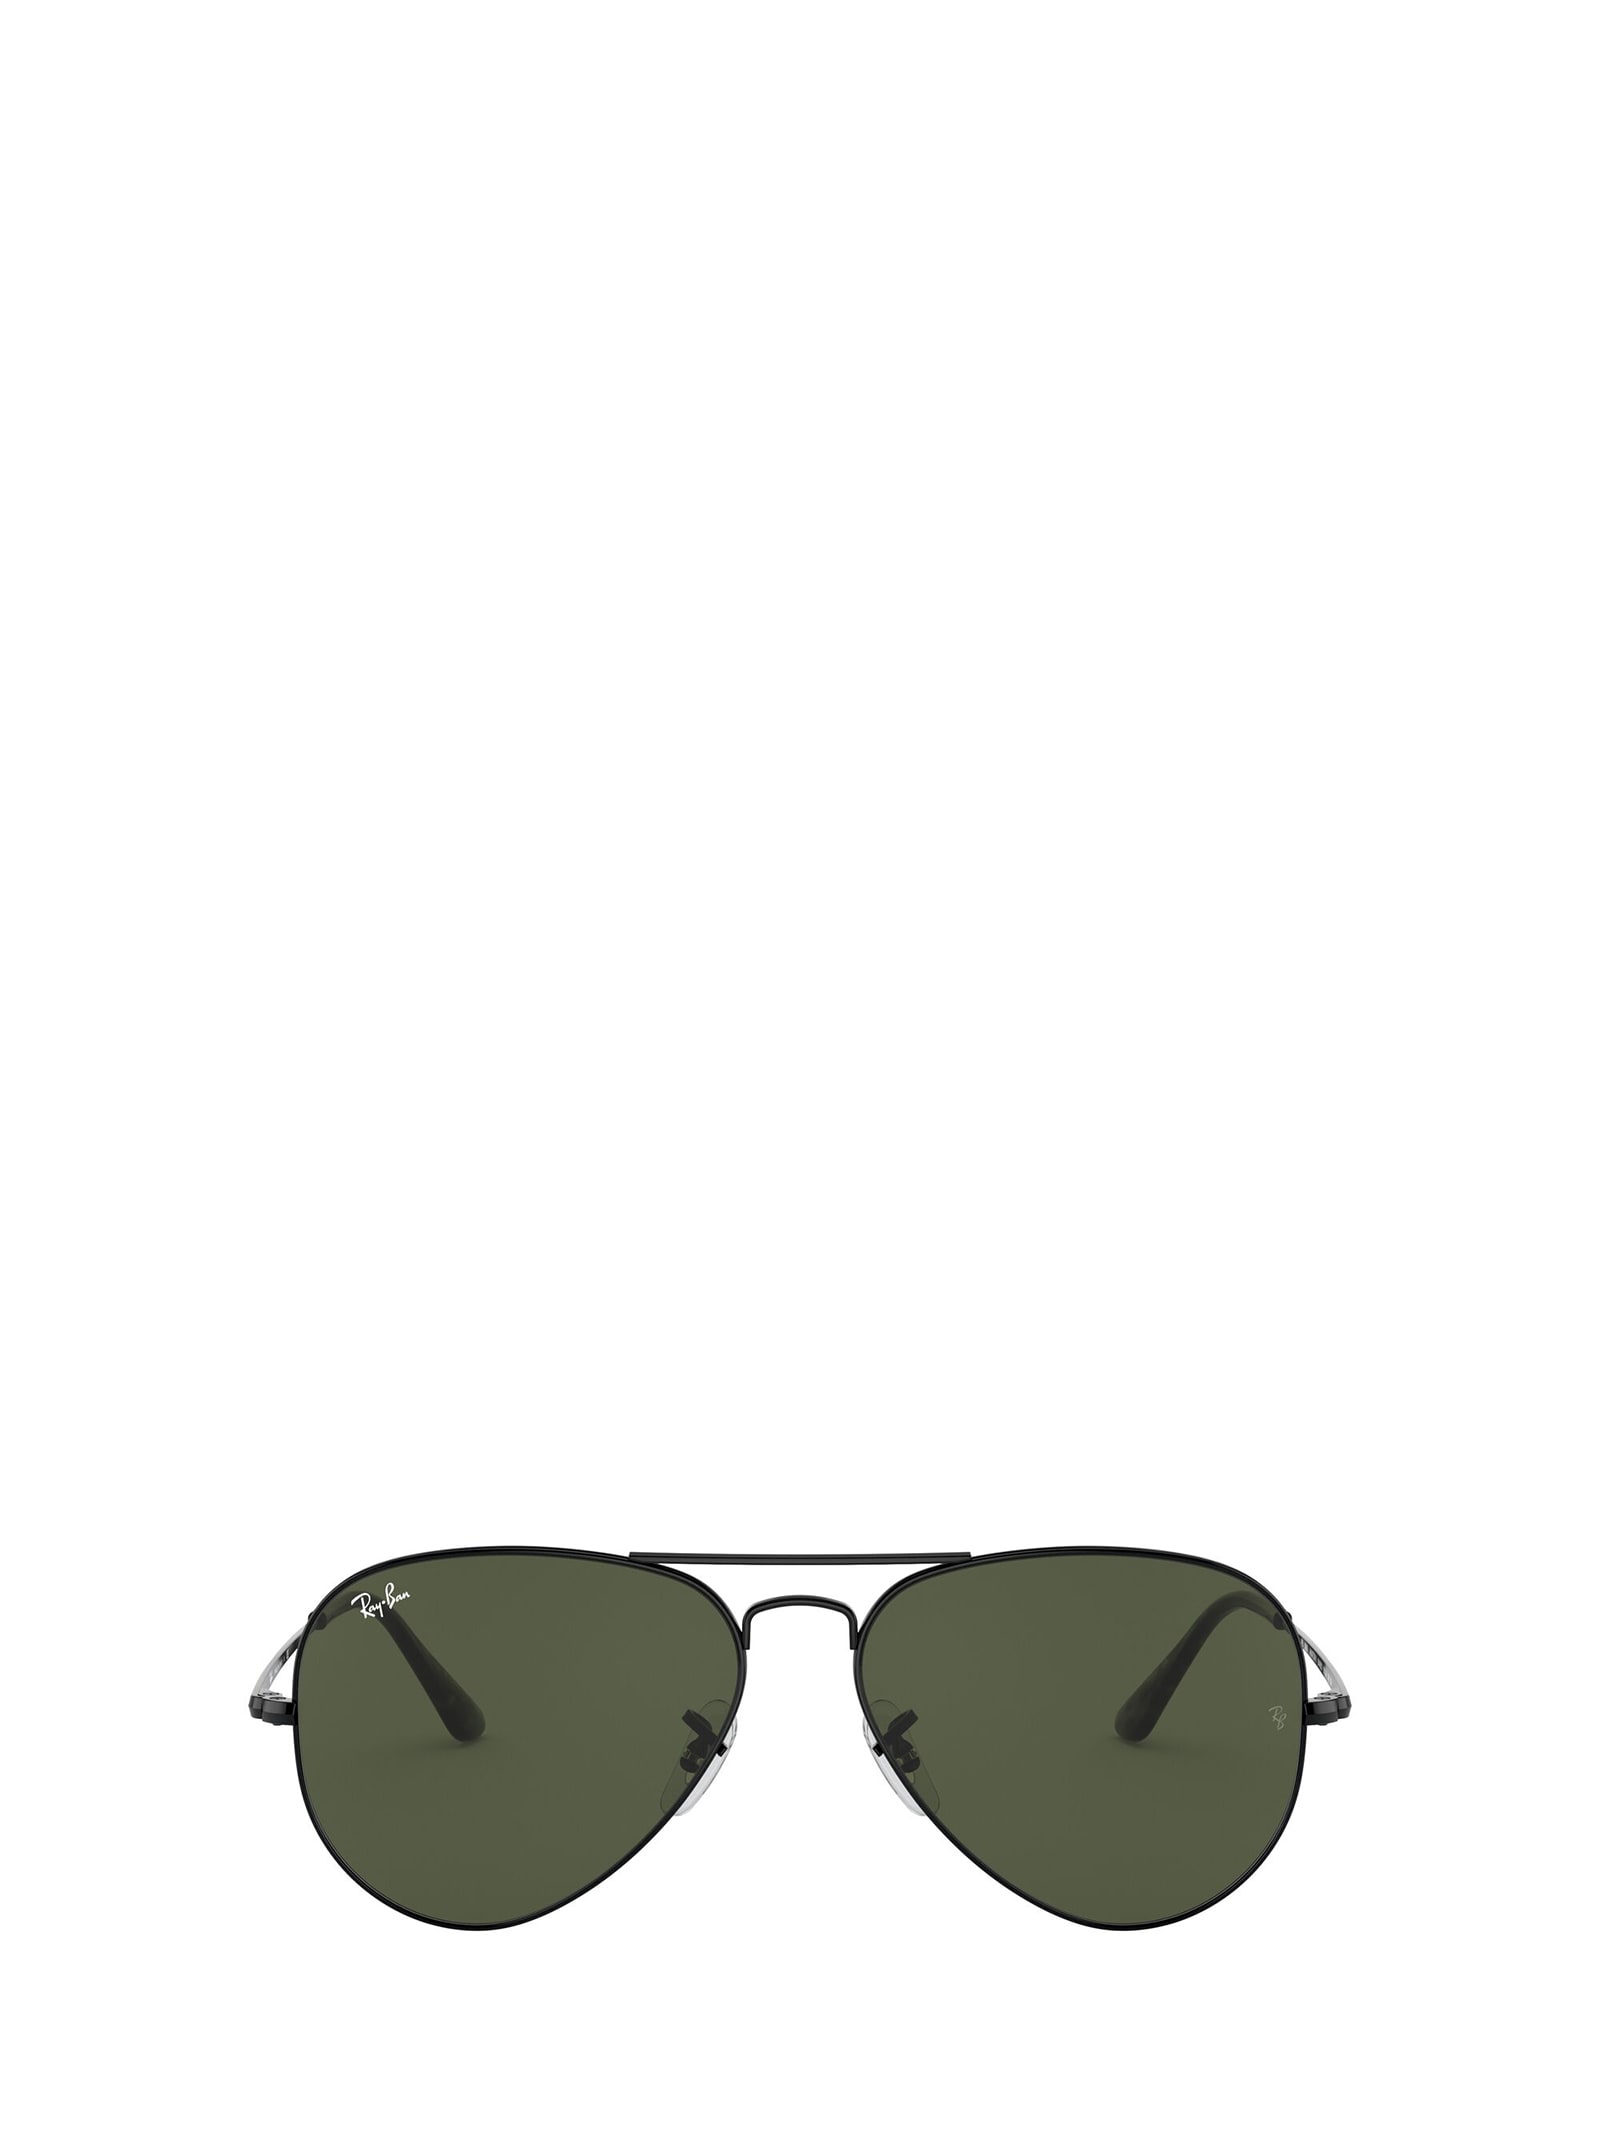 Ray-Ban Rb3689 Black Sunglasses